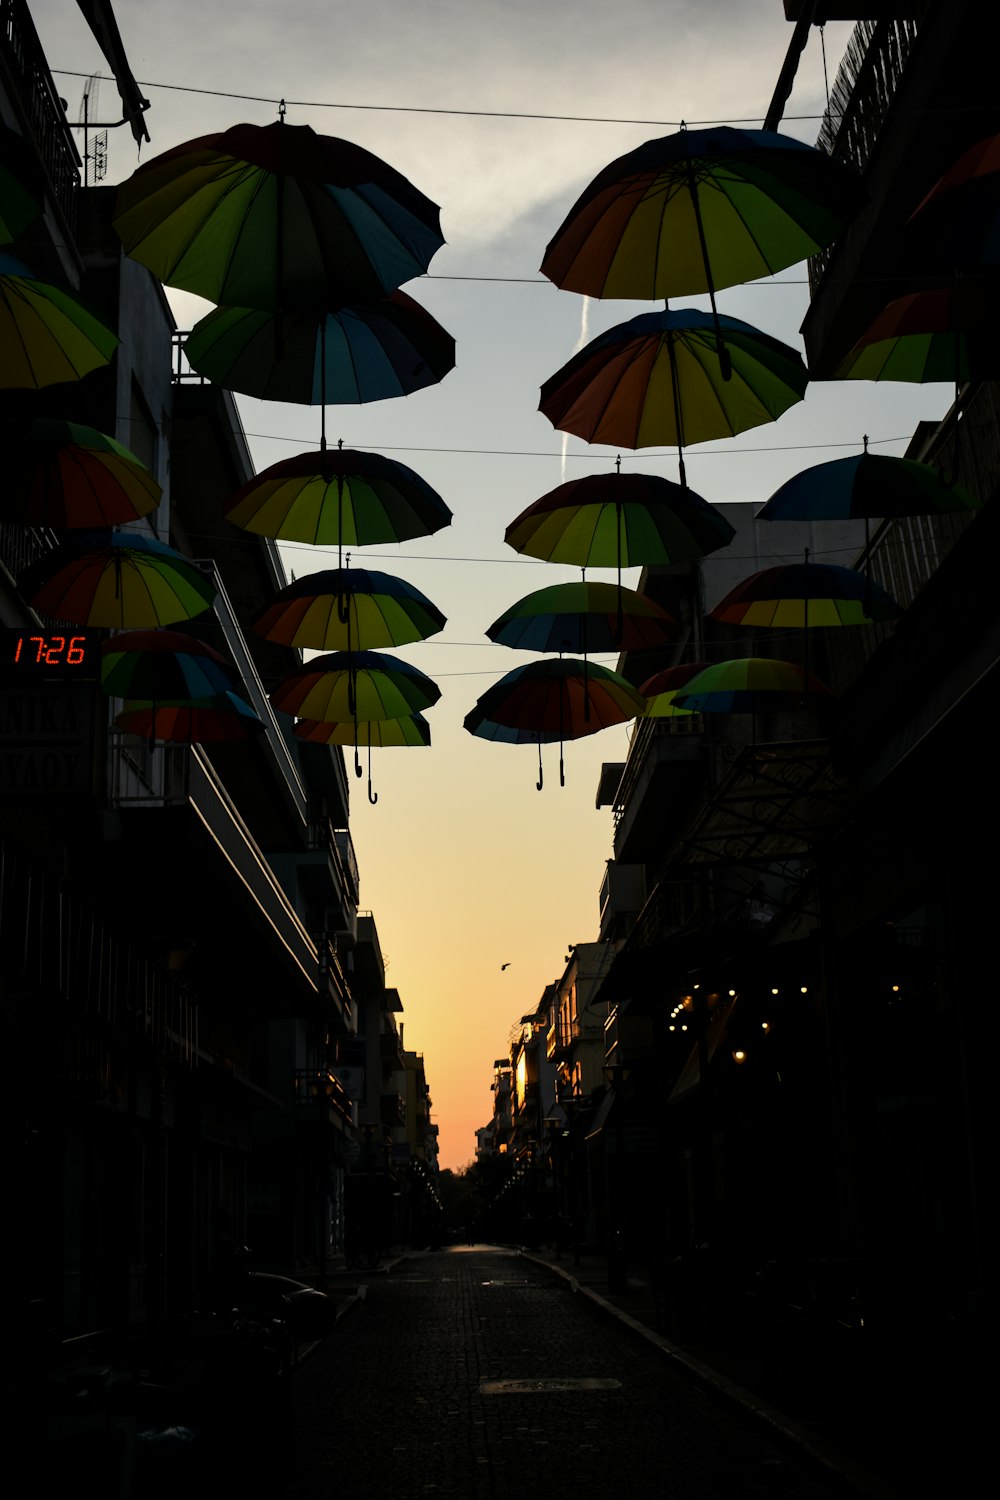 uma rua forrada de guarda-chuvas pendurados na lateral dos edifícios